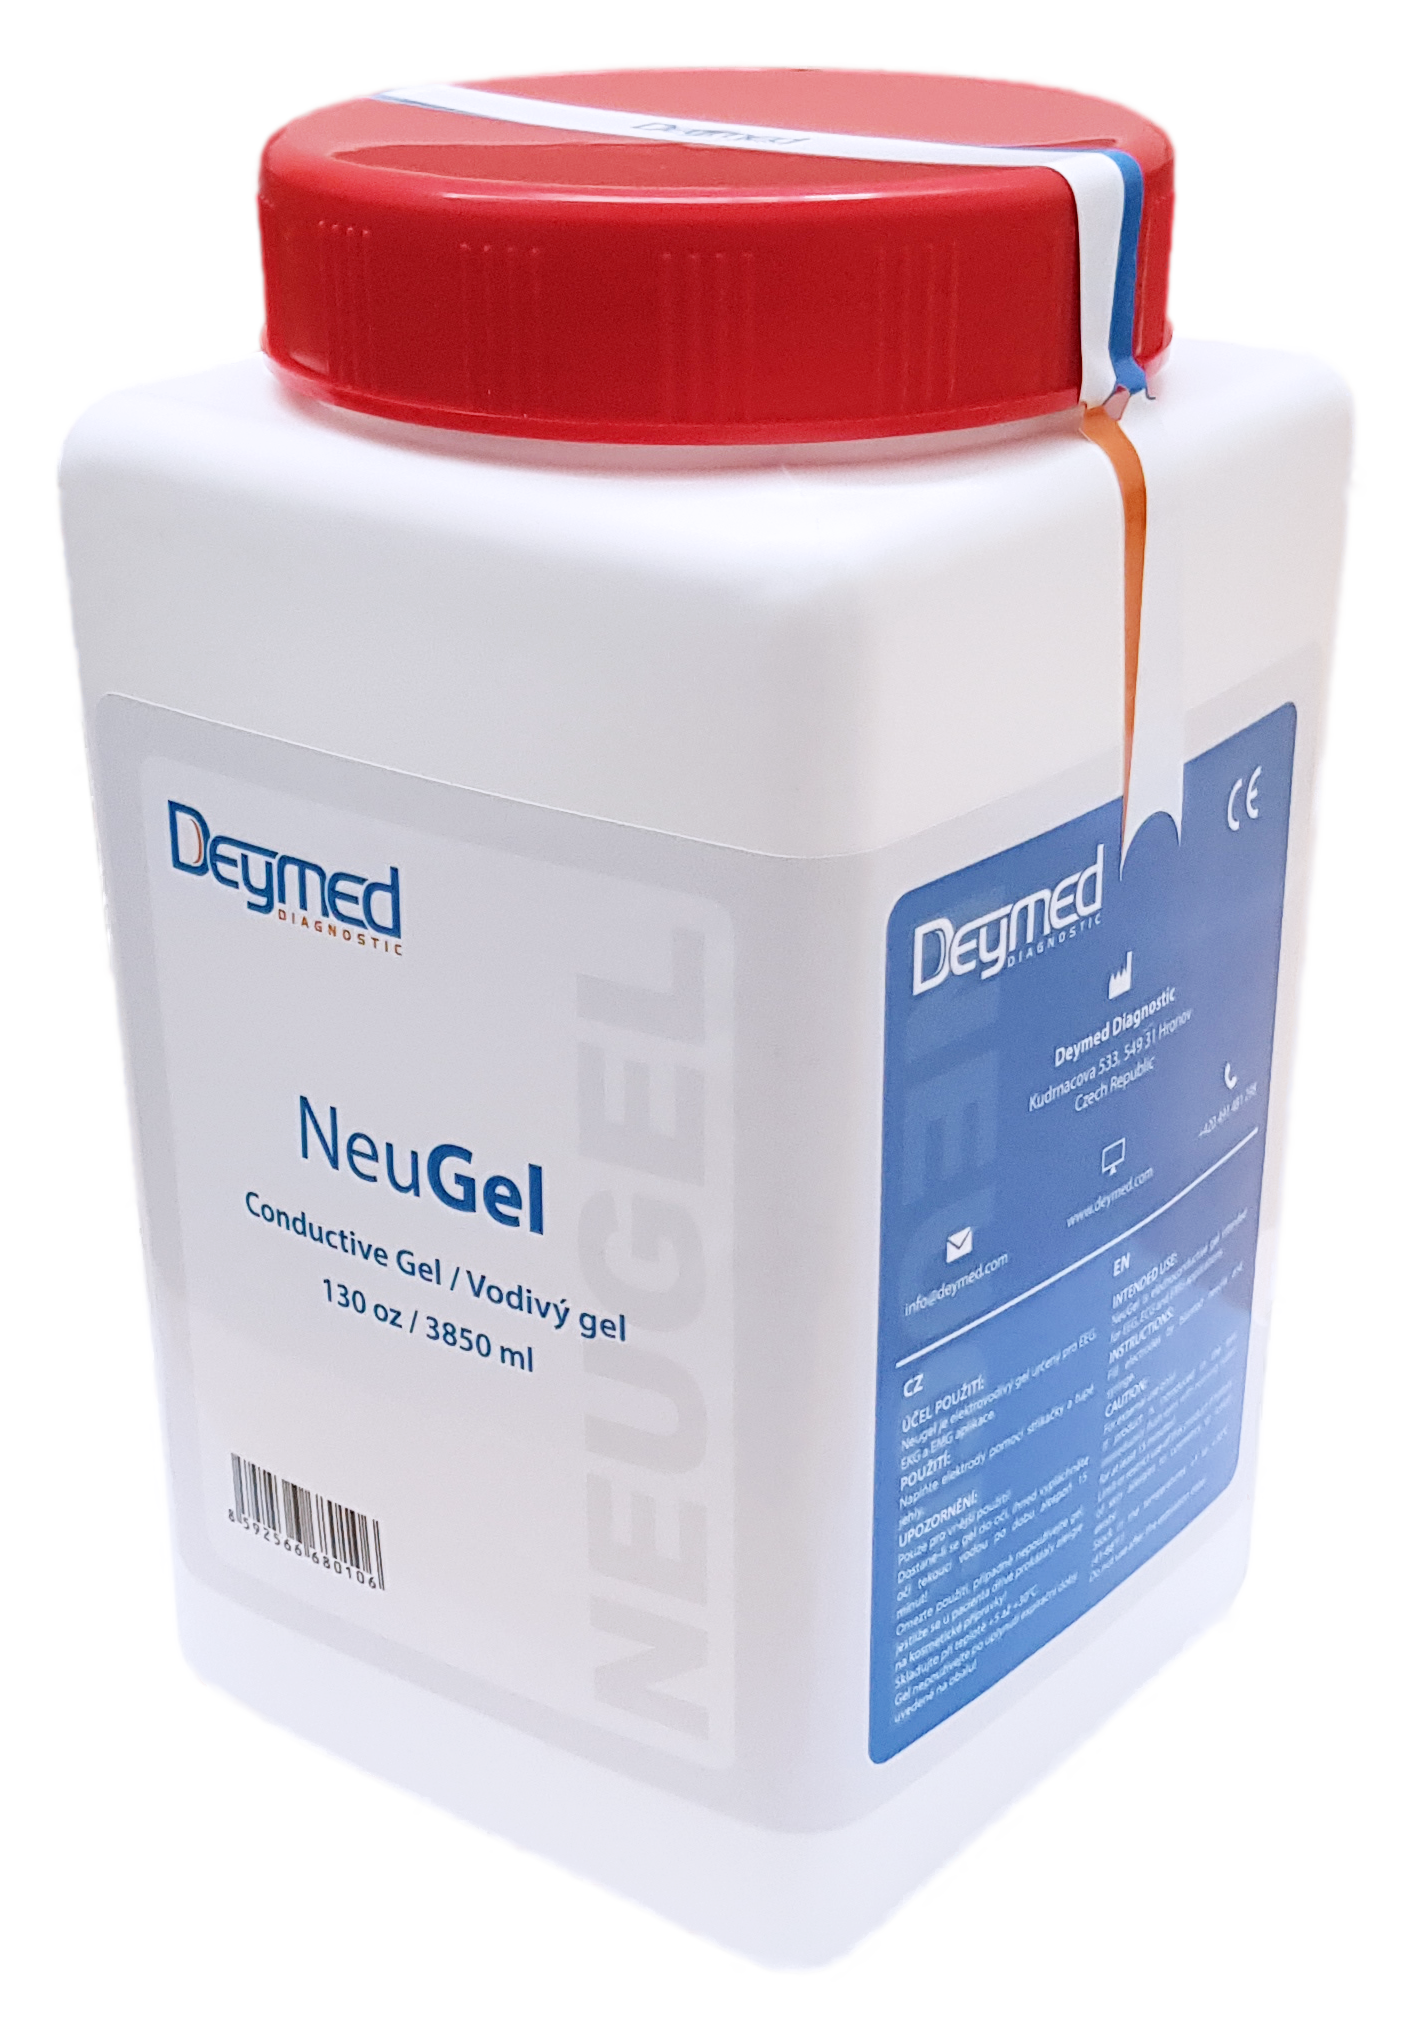 NeuGEL - EEG elektrovodivý gel Deymed: 3850ml (130 oz)